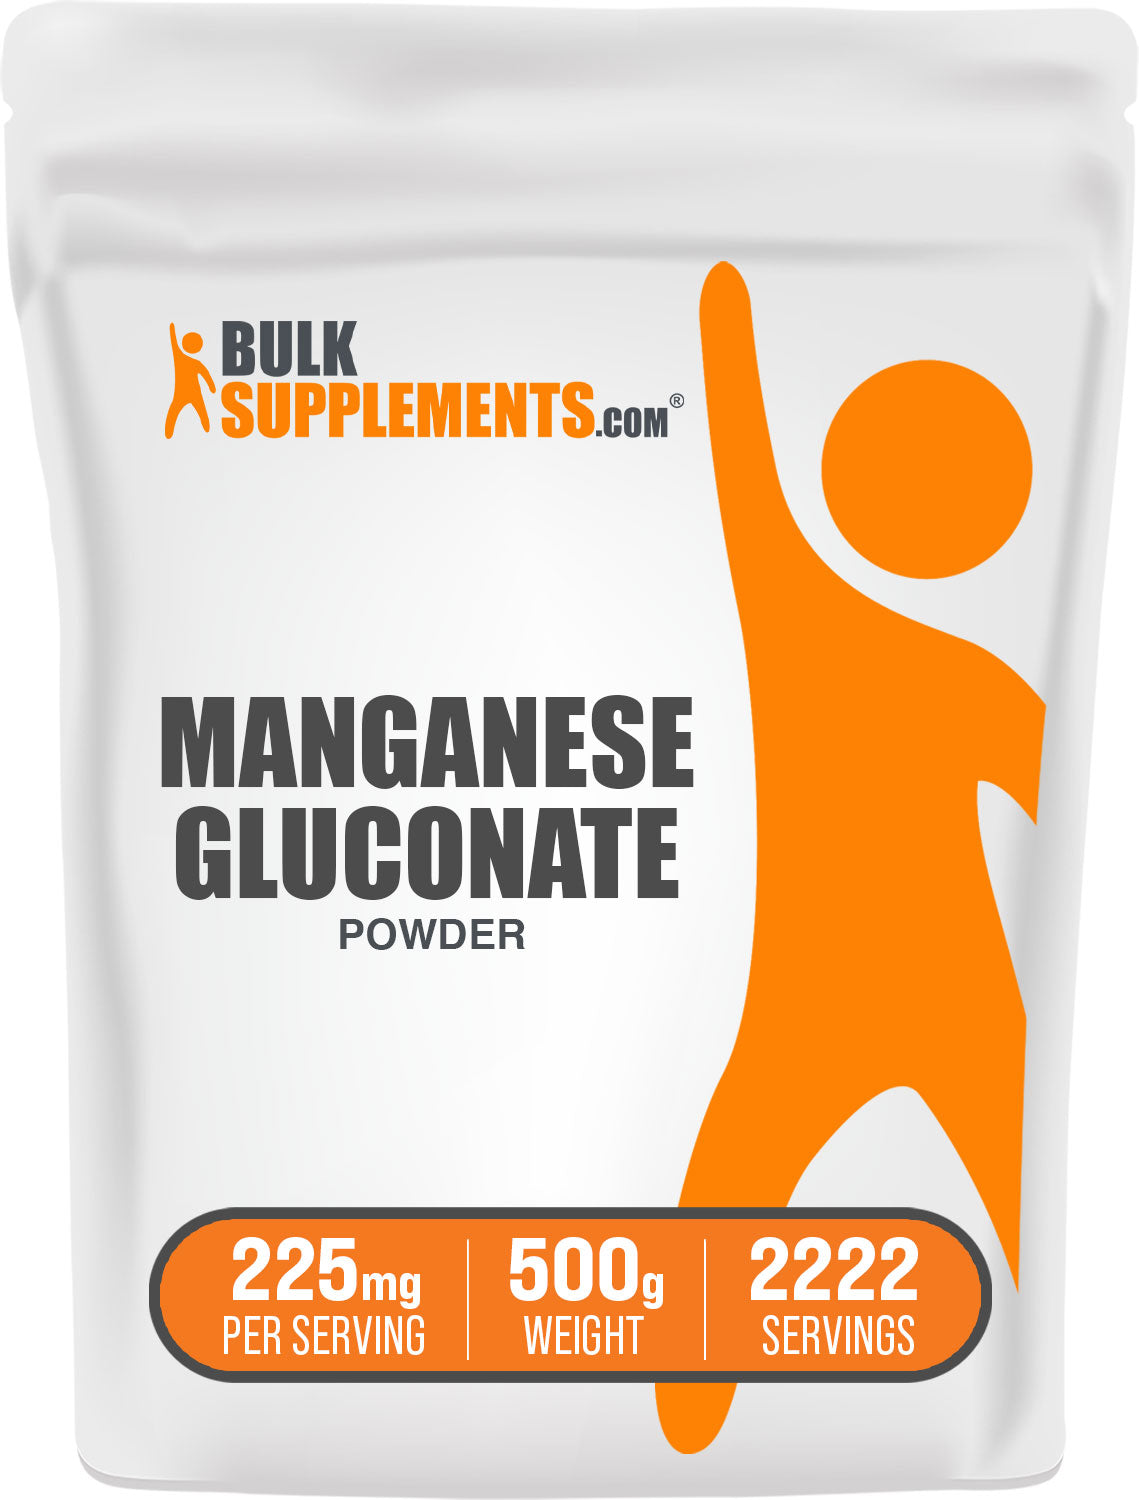 BulkSupplements Manganese Gluconate Powder 500g bag